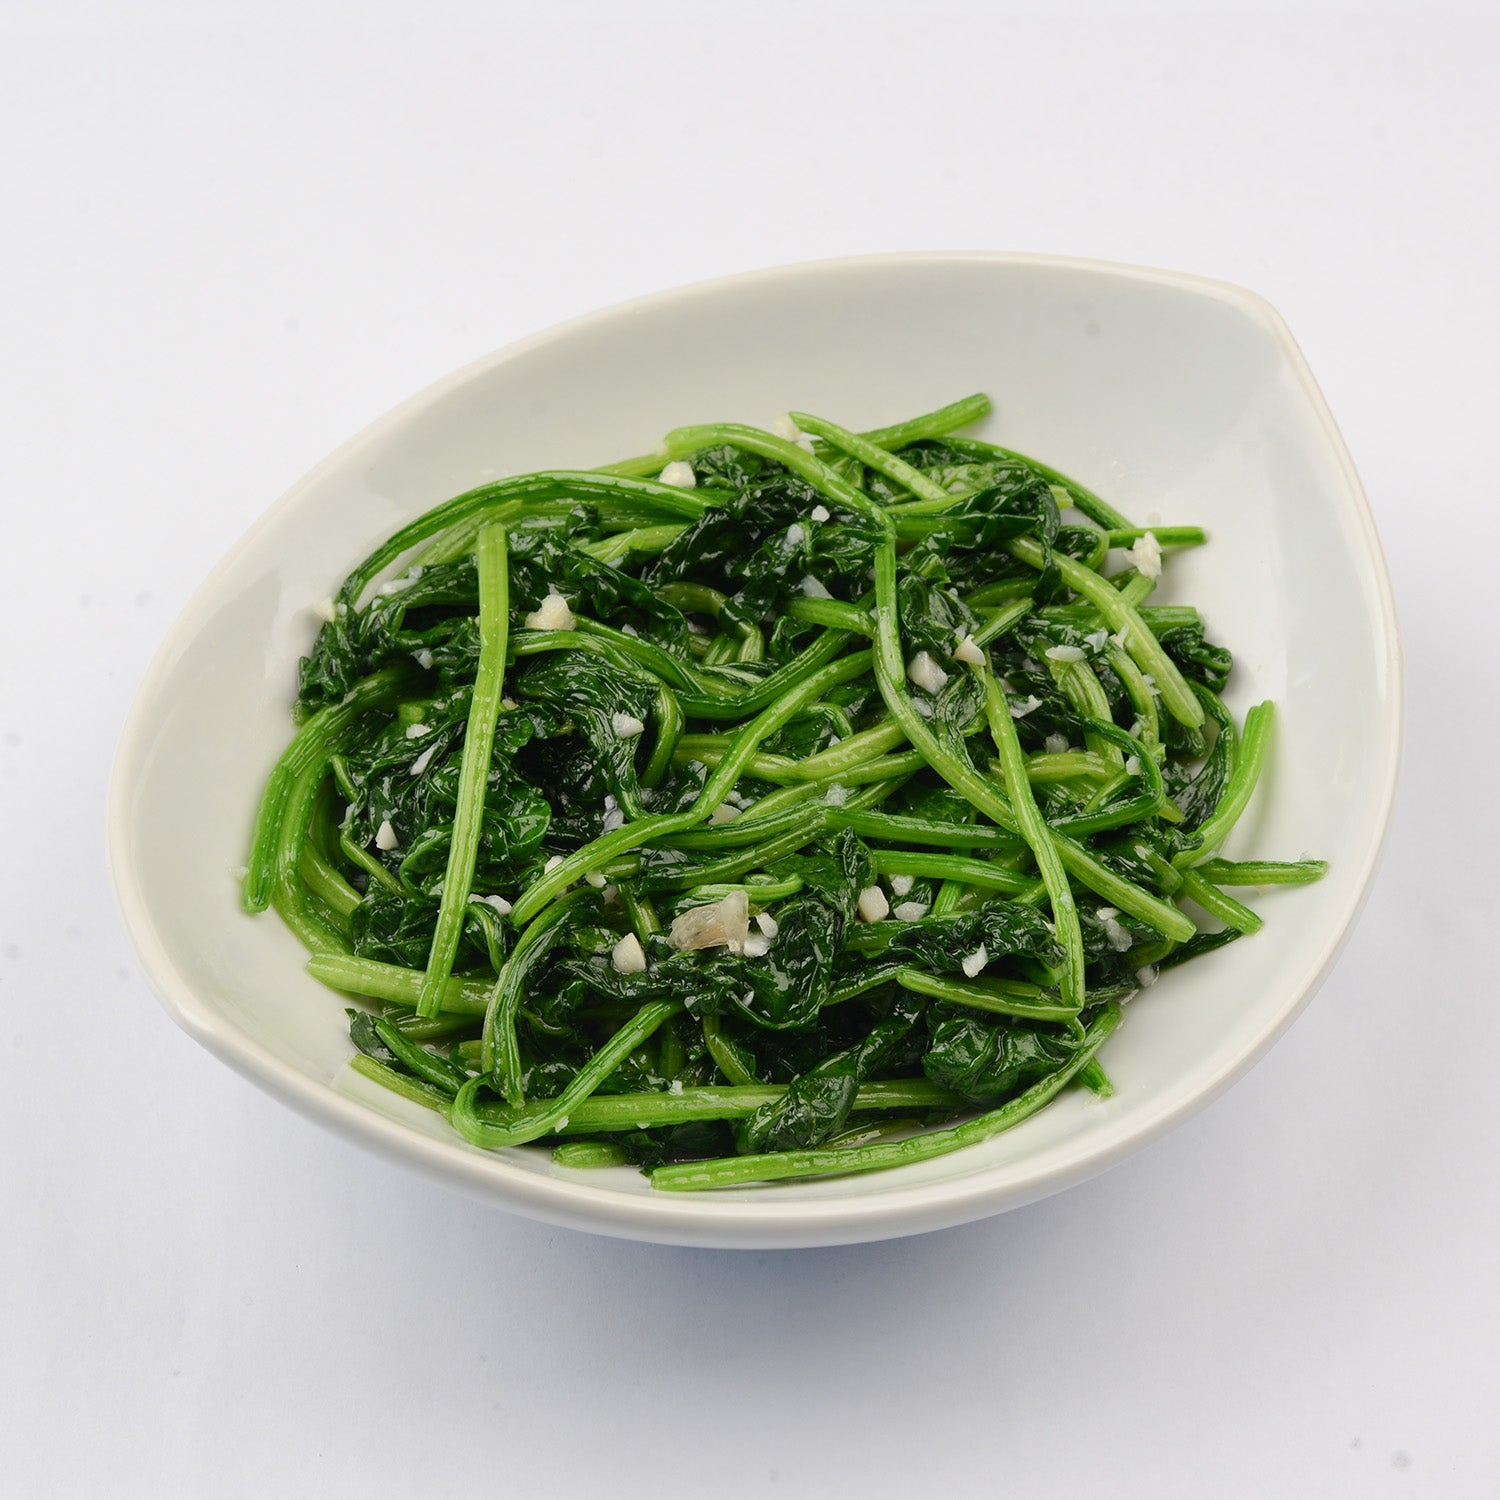 Stir fry taiwanese spinach